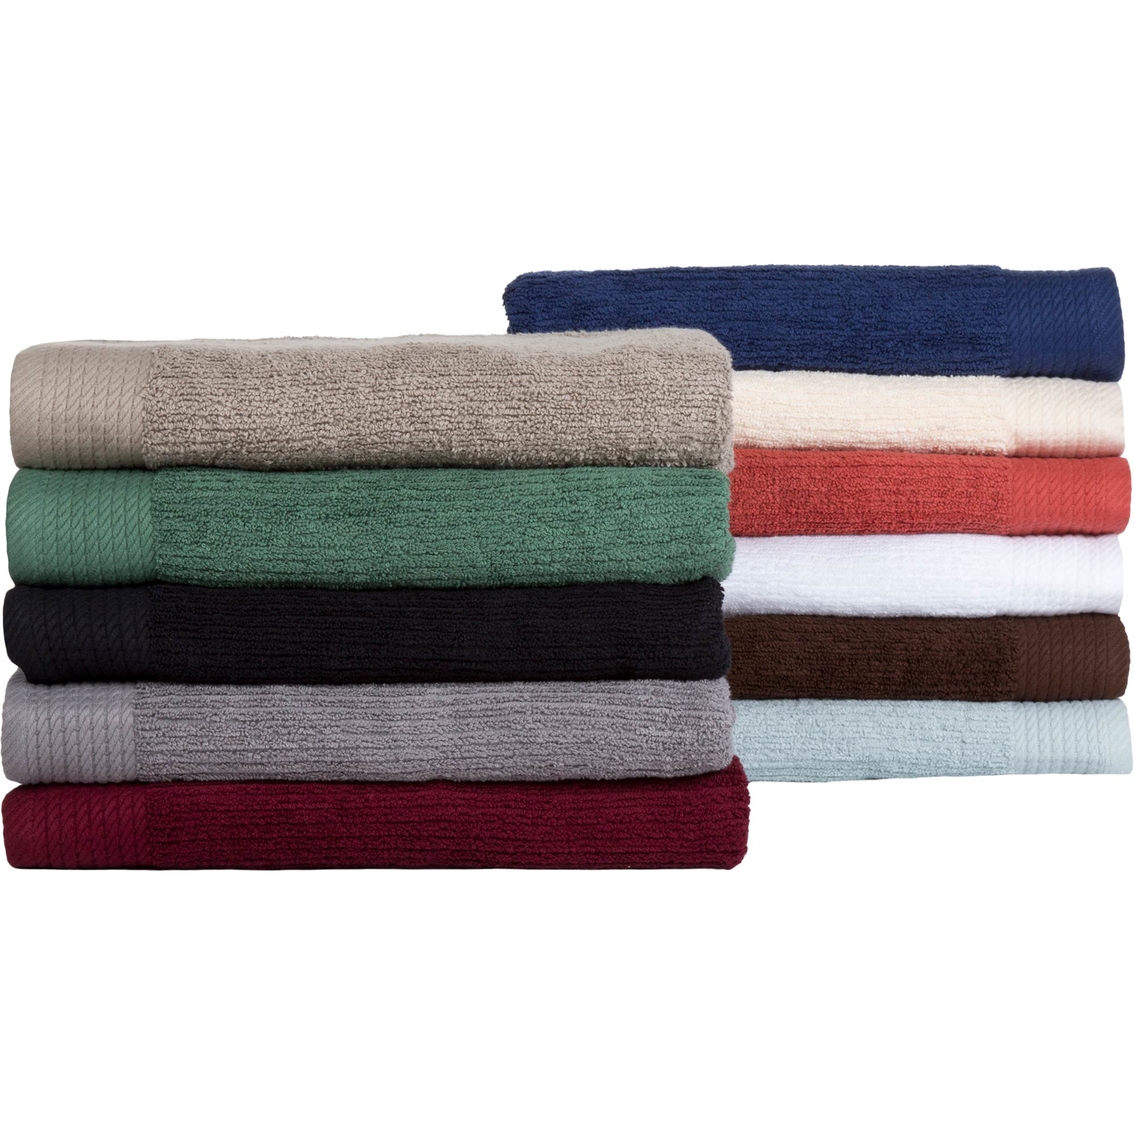 Lavish Home Ribbed 100% Cotton 10 pc. Towel Set - Image 4 of 5